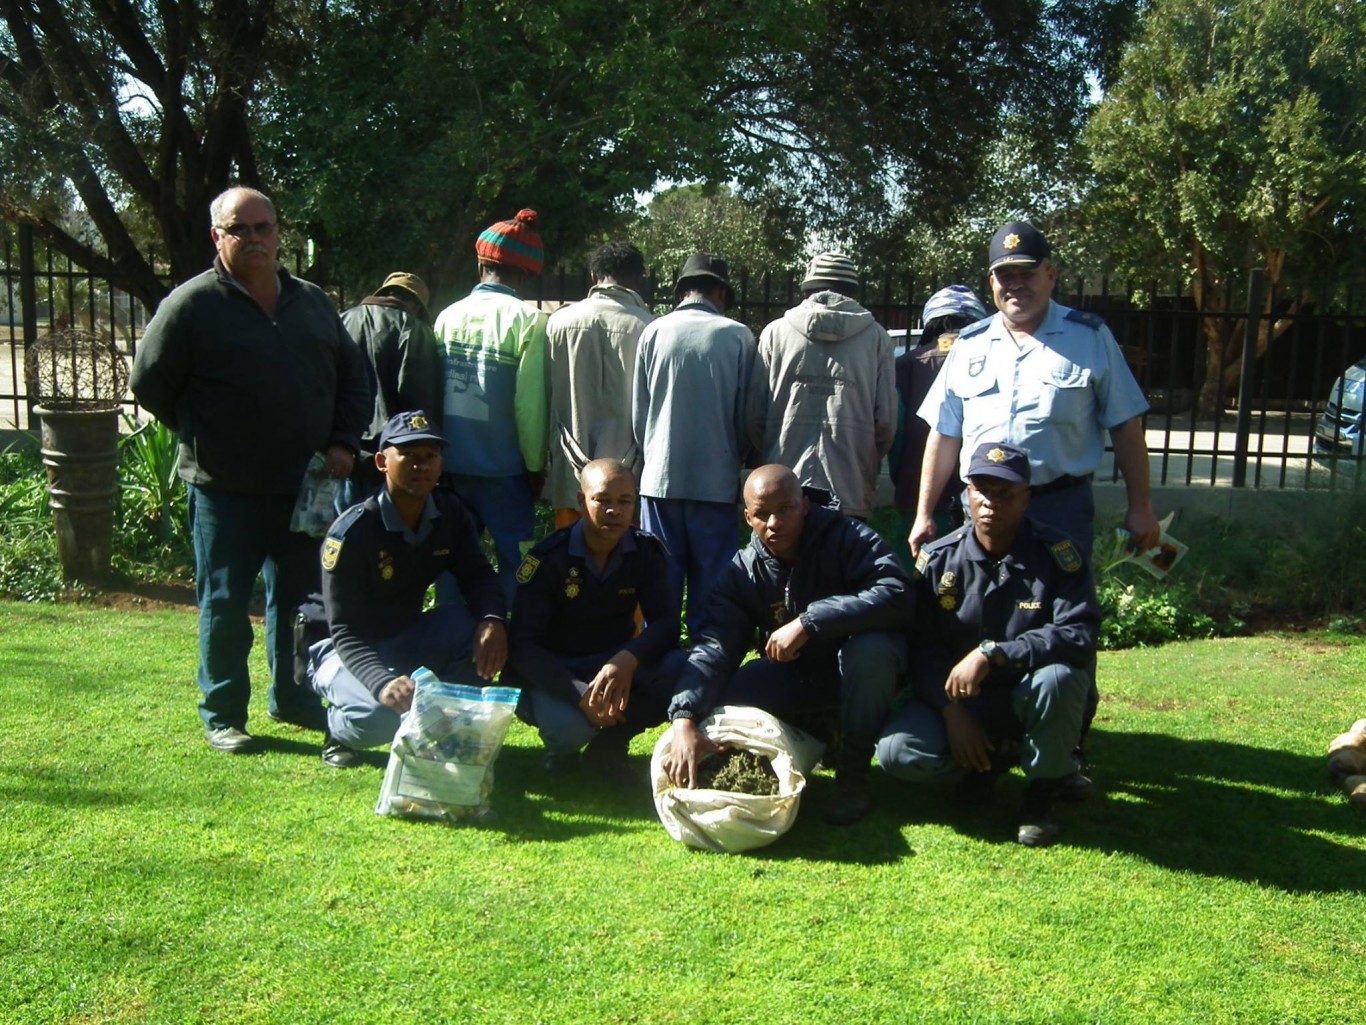 Dagga arrest made at Dealesville 55 kilometres outside Bloemfontein